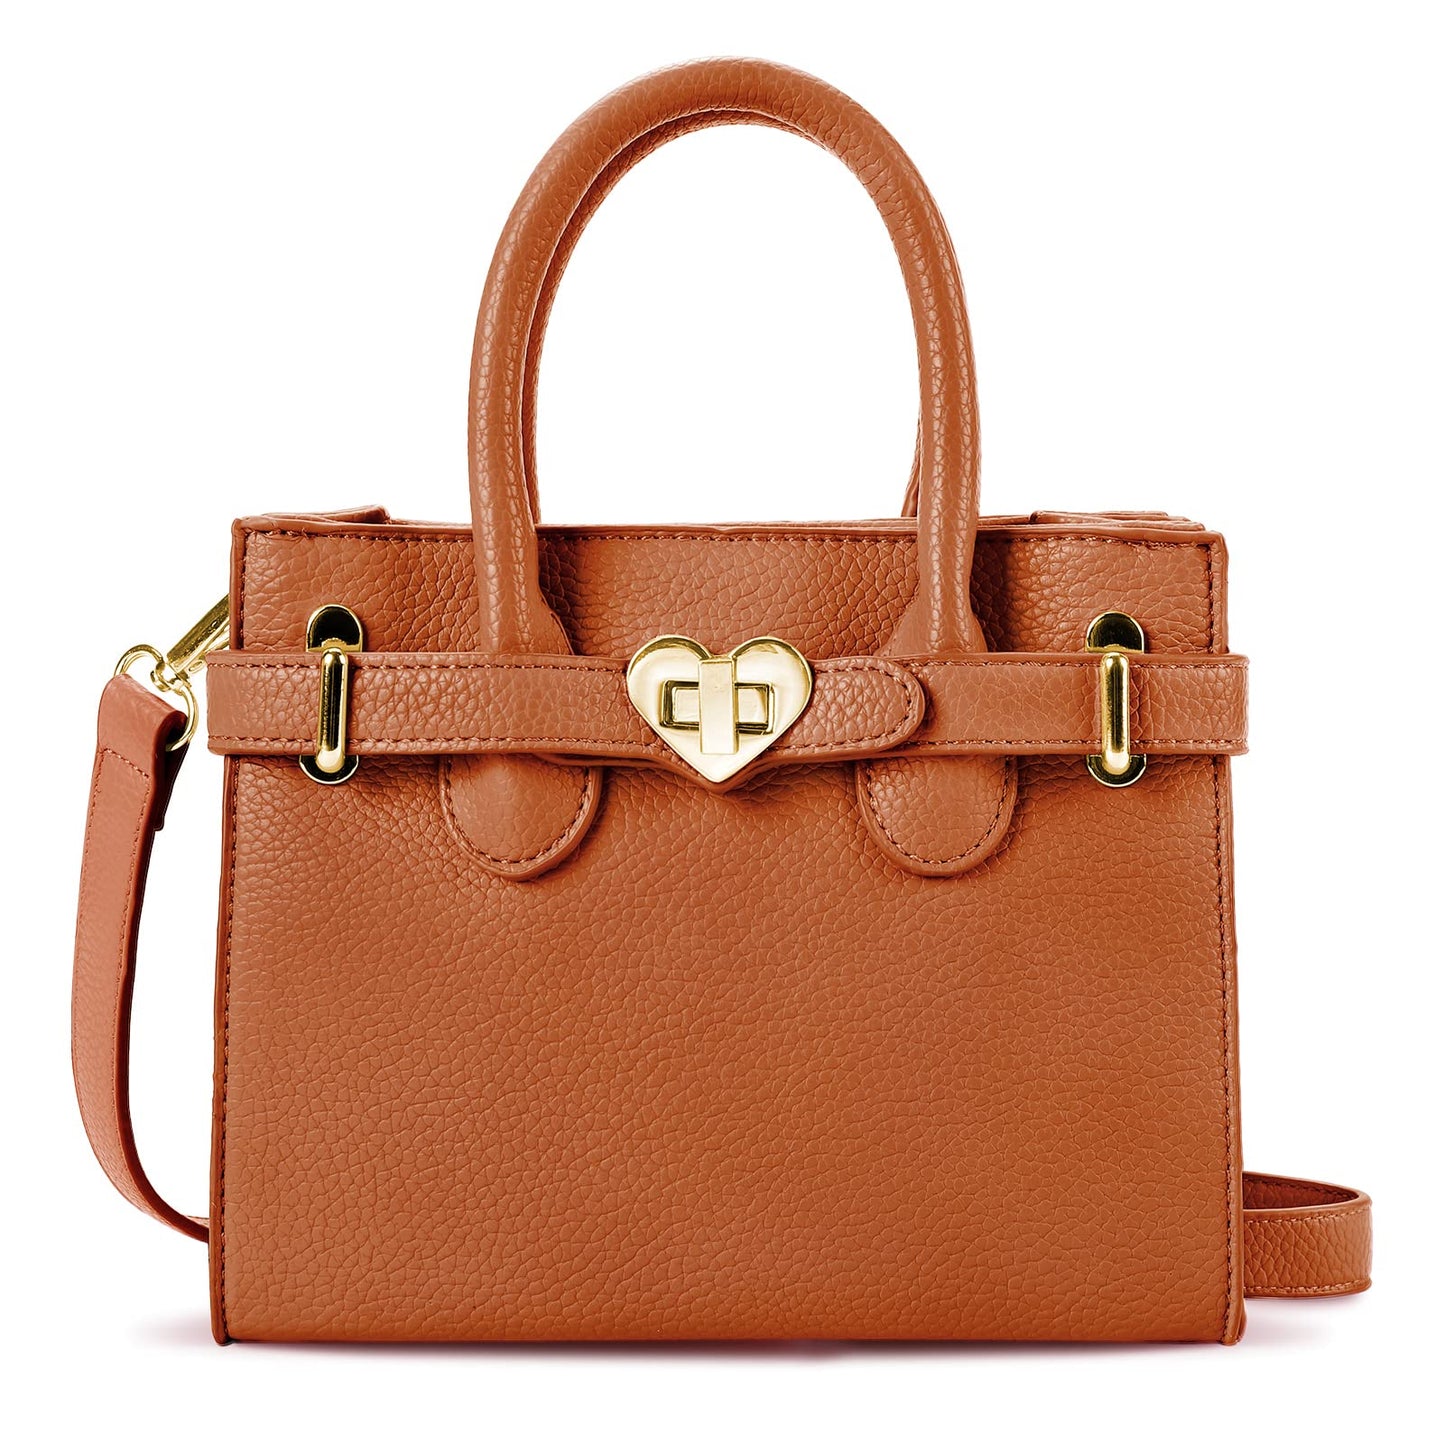 Miss Classy Handbag Mibasies Yellow Brown 